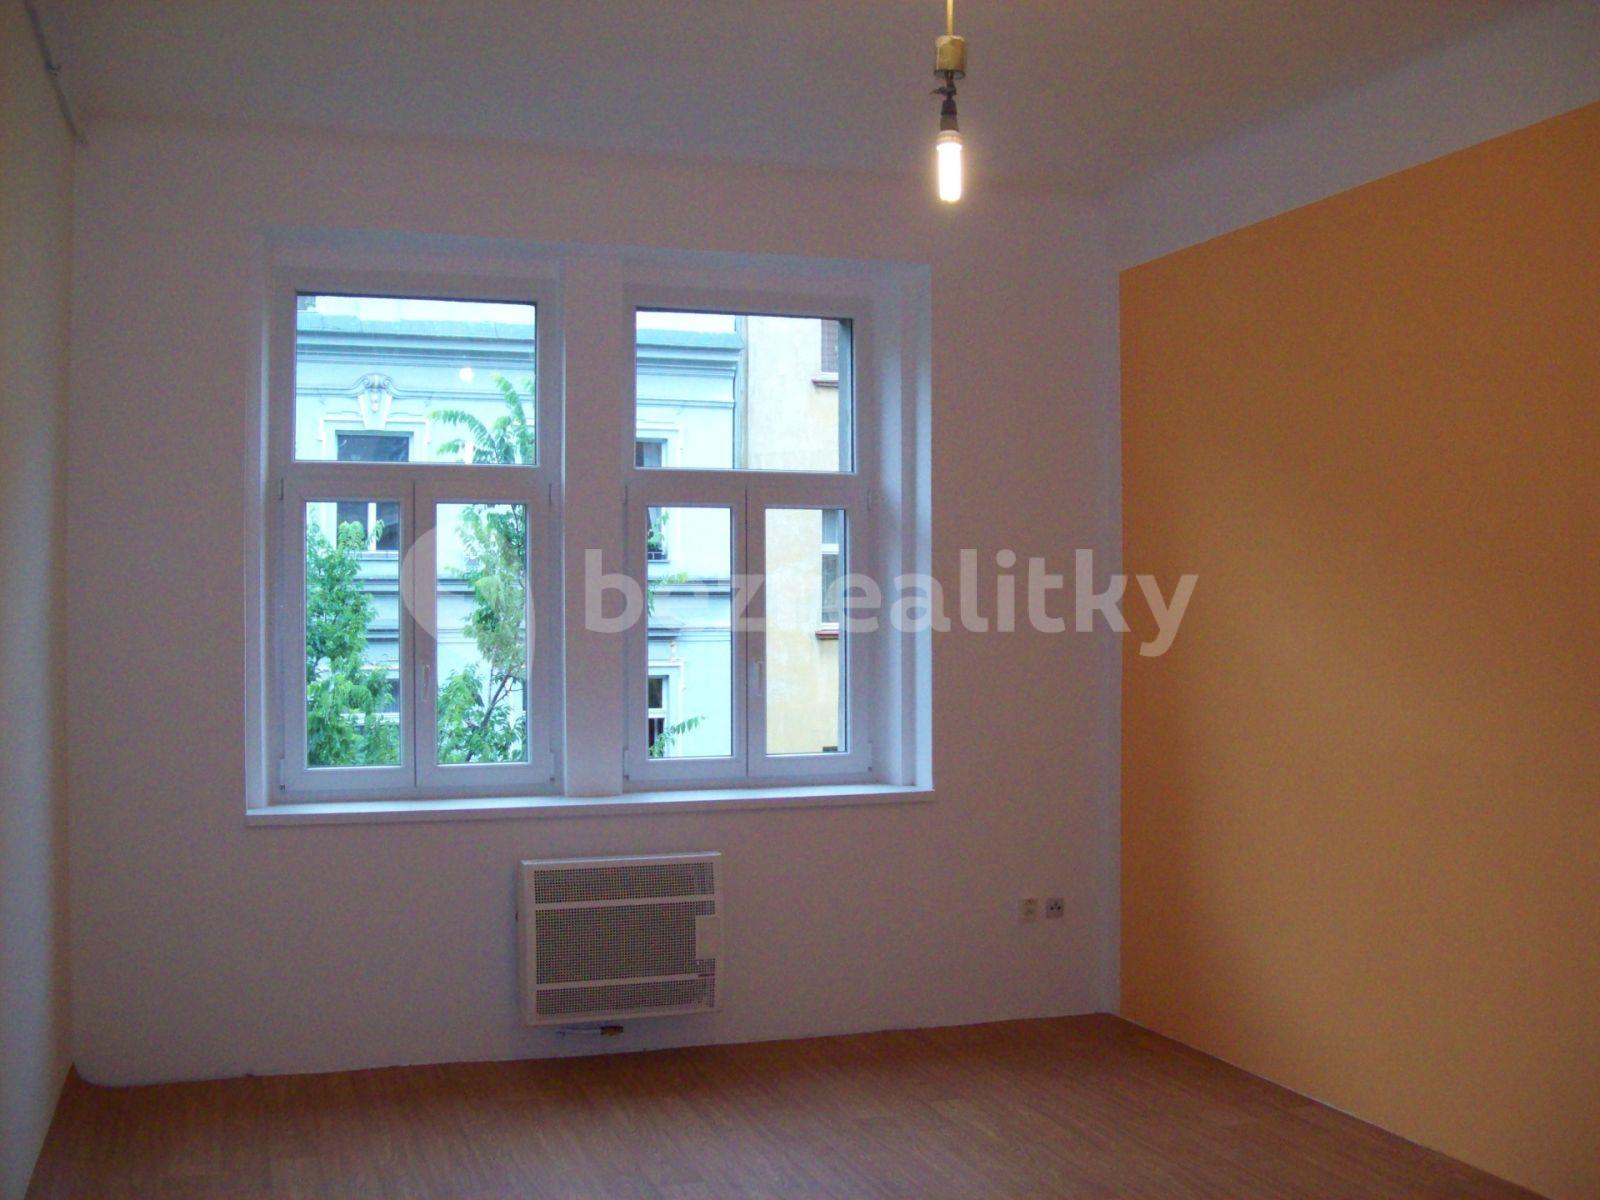 2 bedroom flat to rent, 70 m², Lužická, Prague, Prague